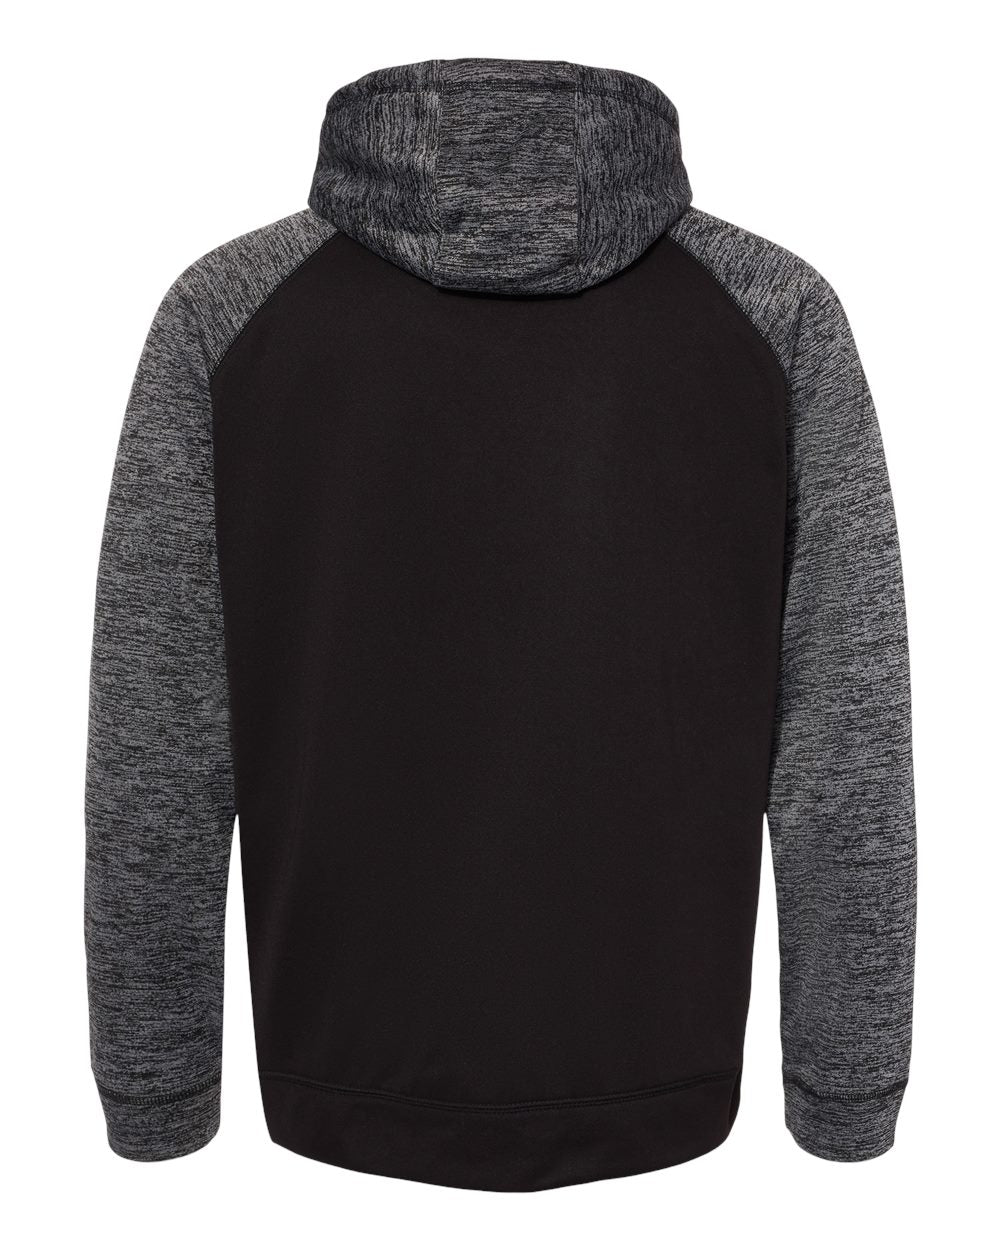 Burnside Performance Raglan Pullover Sweatshirt 8670 #color_Black/ Heather Charcoal